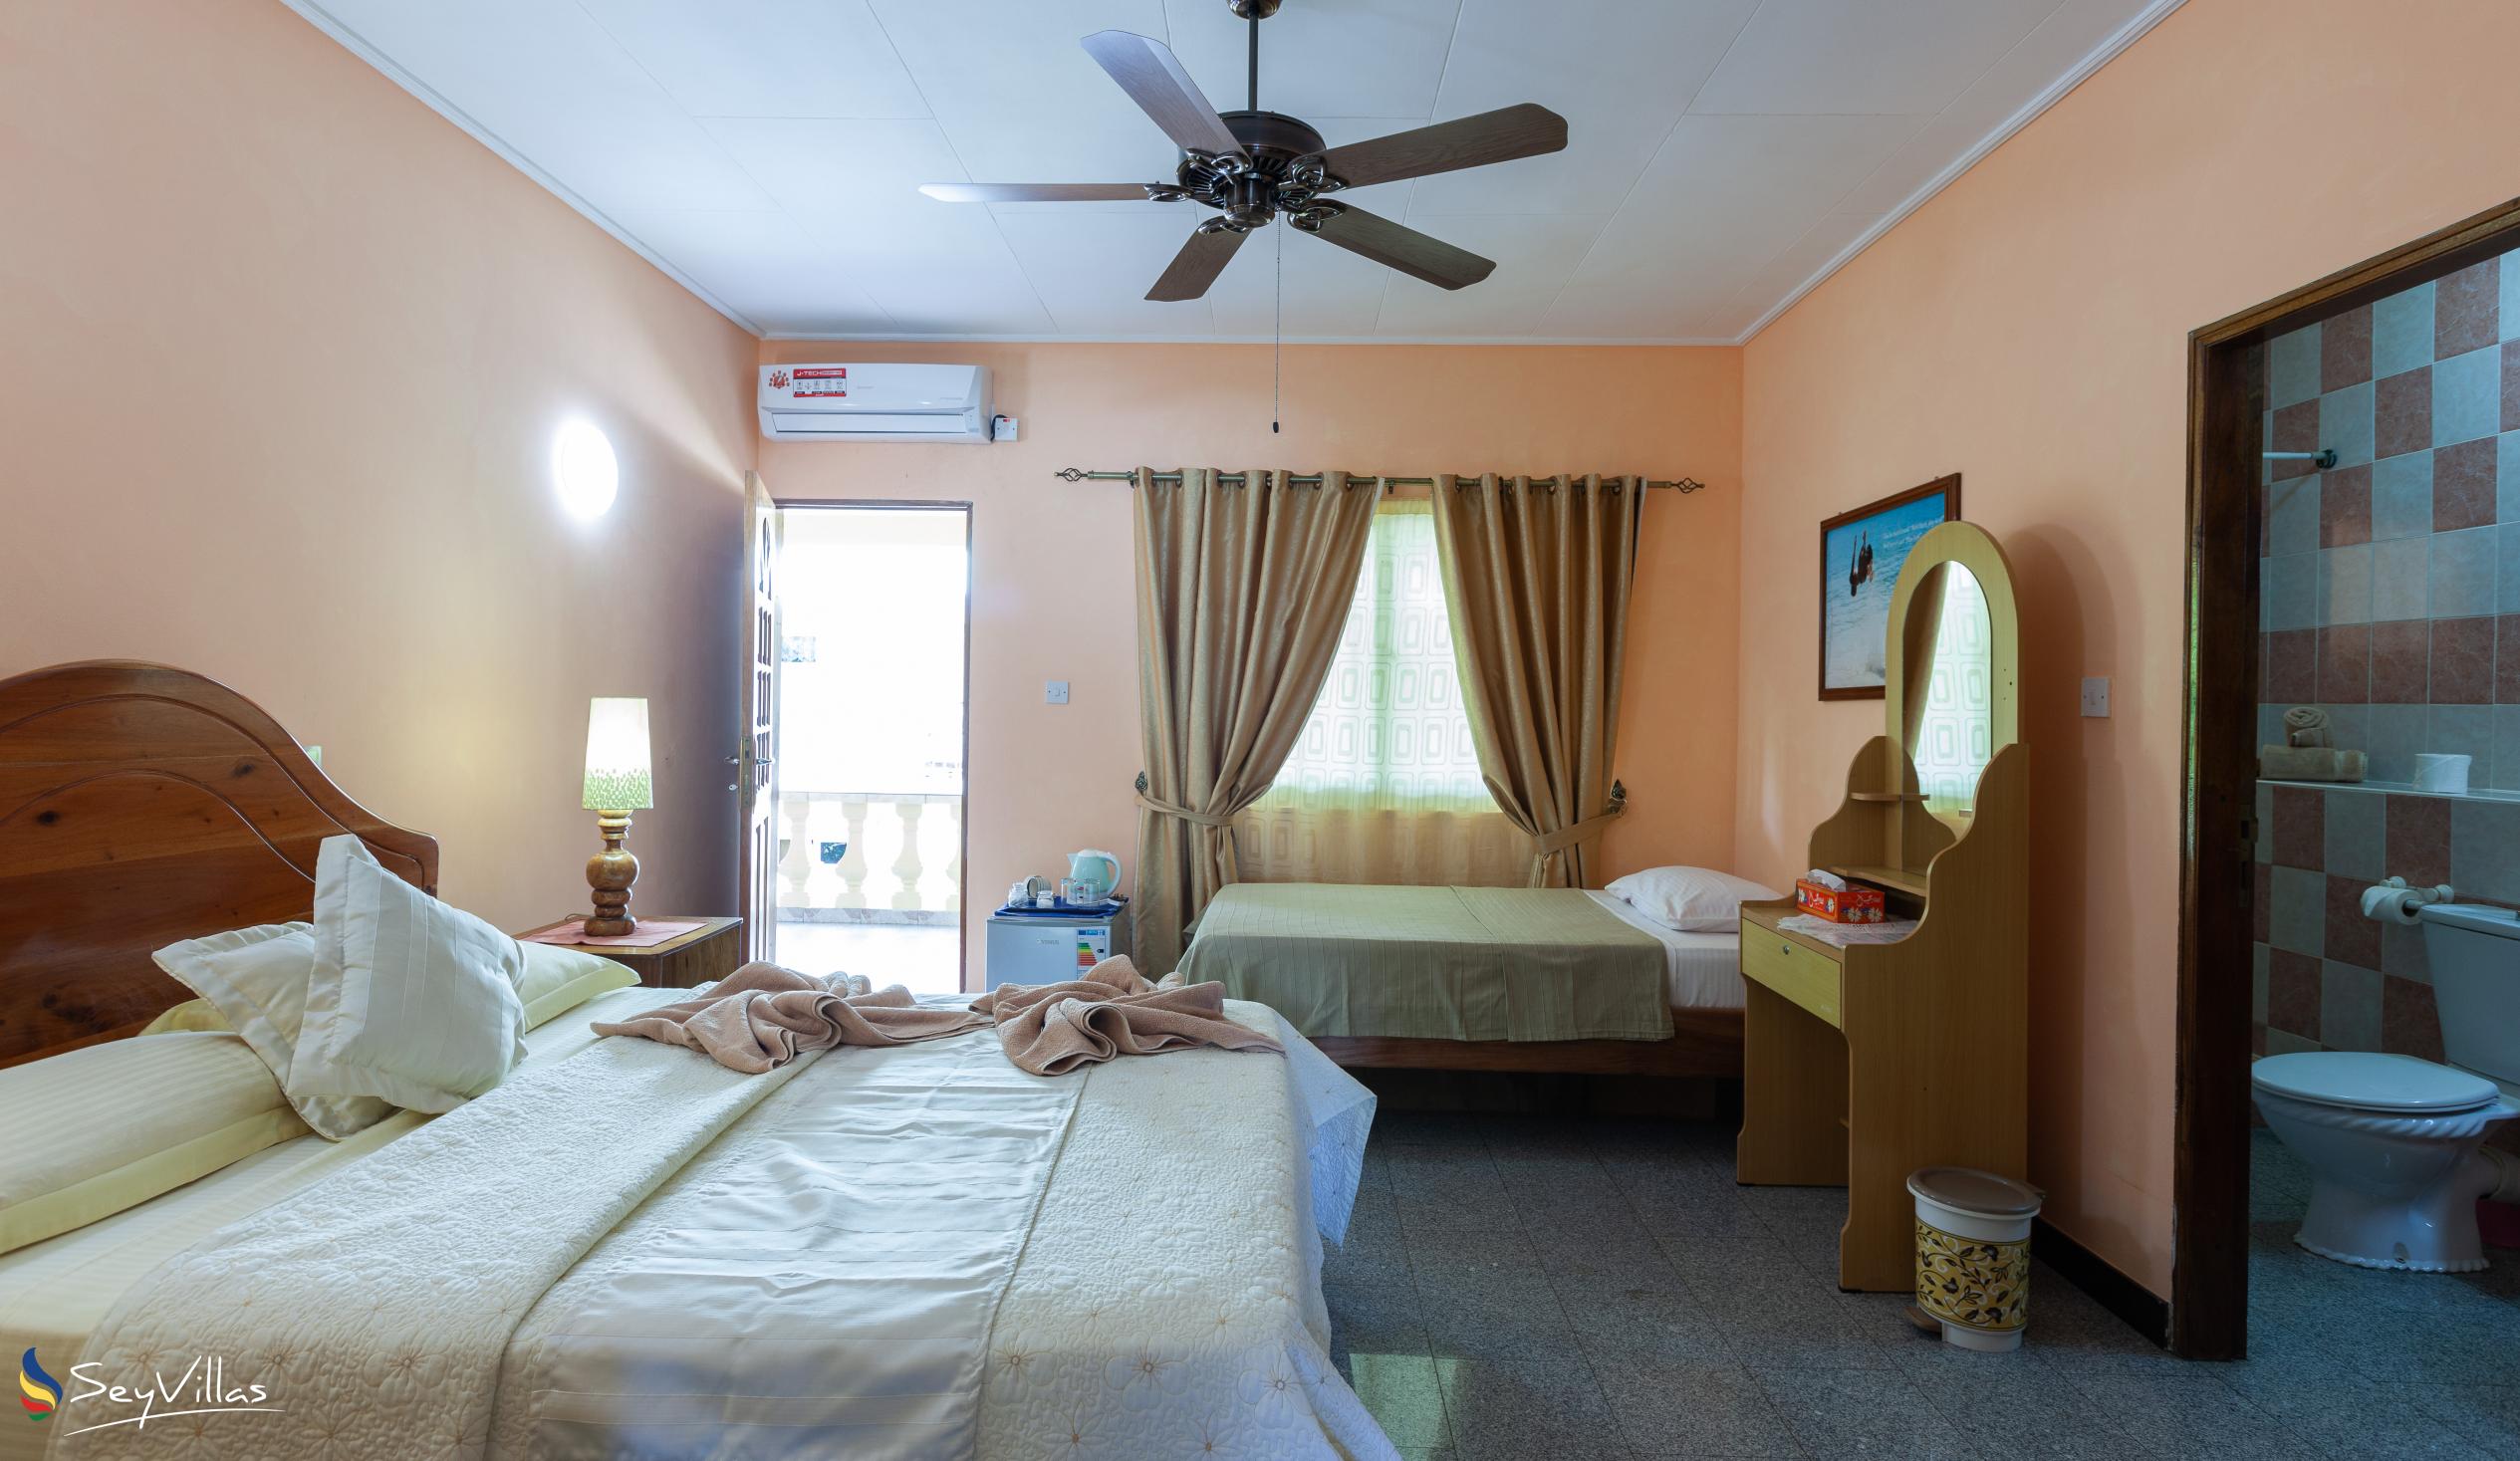 Photo 78: Villa Bananier - Family Room - Praslin (Seychelles)